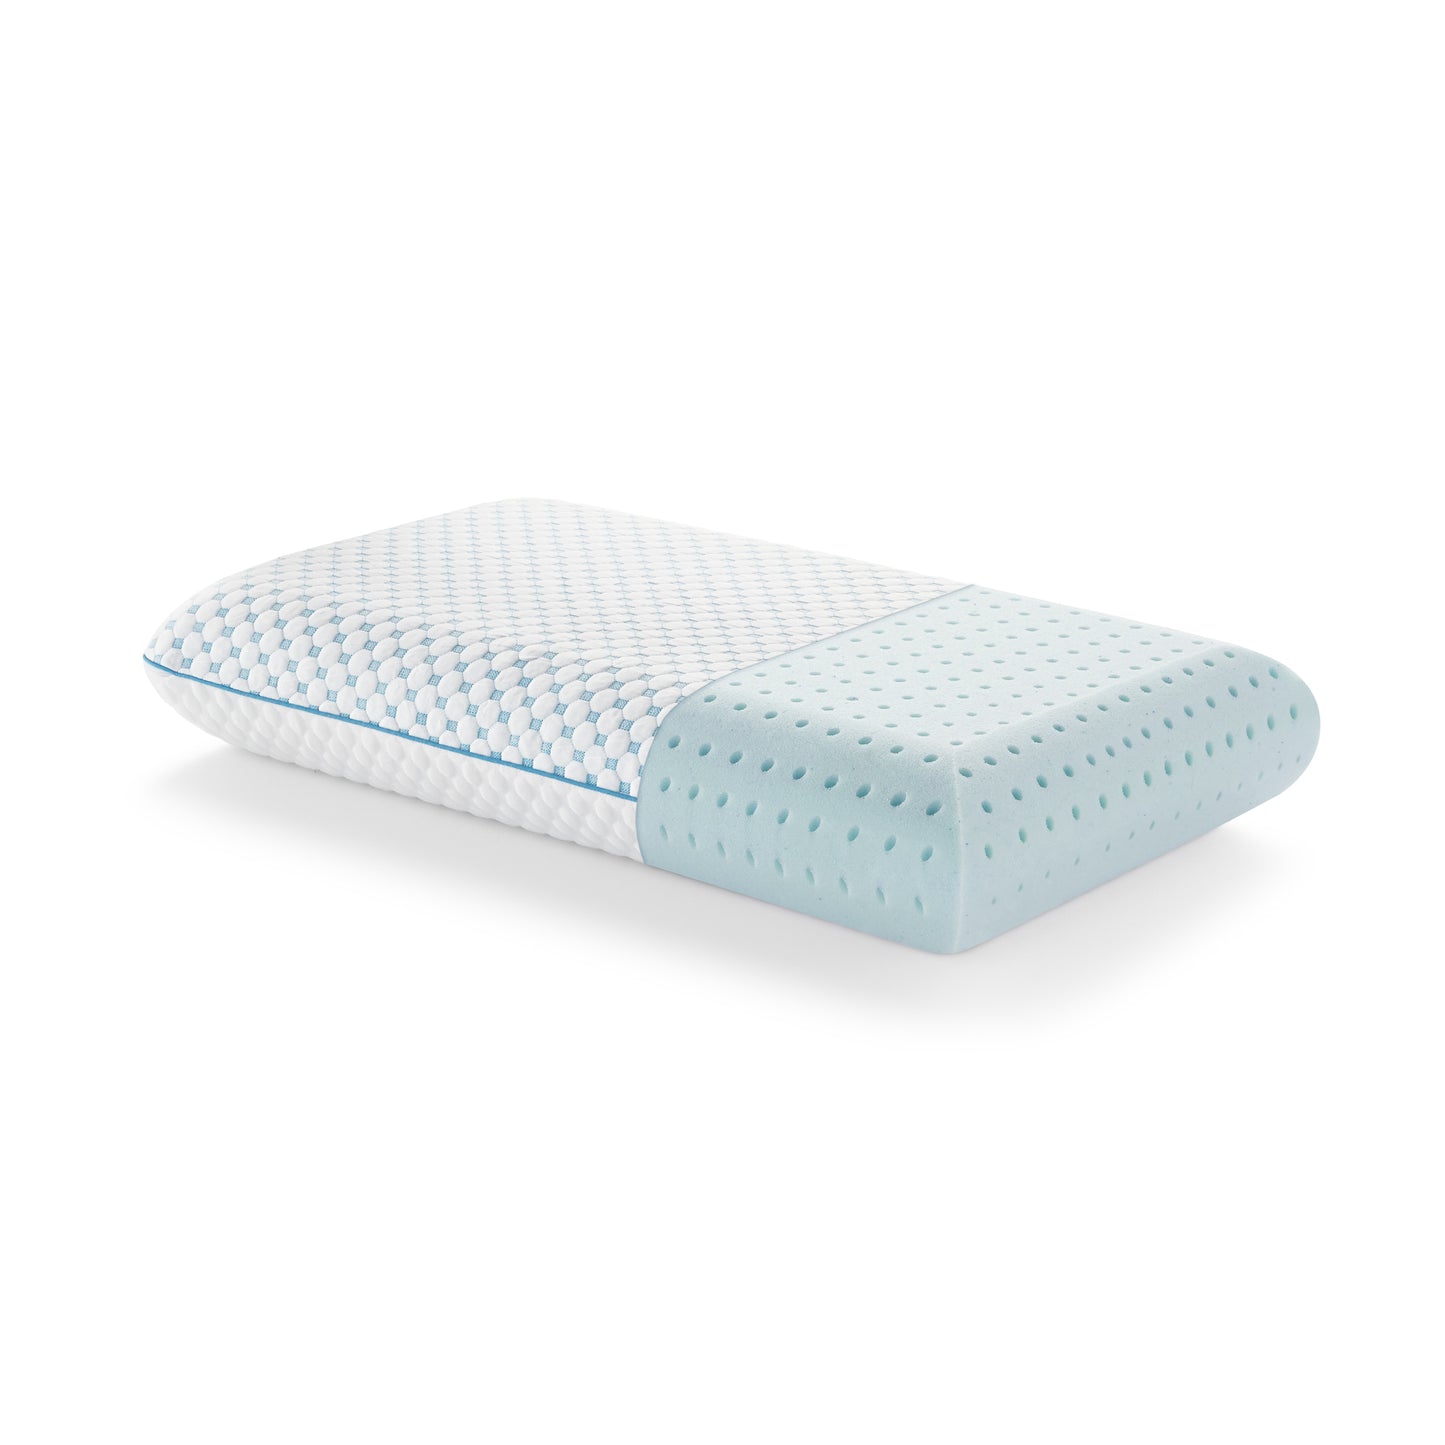 Hyperchill Technology Gel Memory Foam Pillow Plus Reversible Cooling Cover